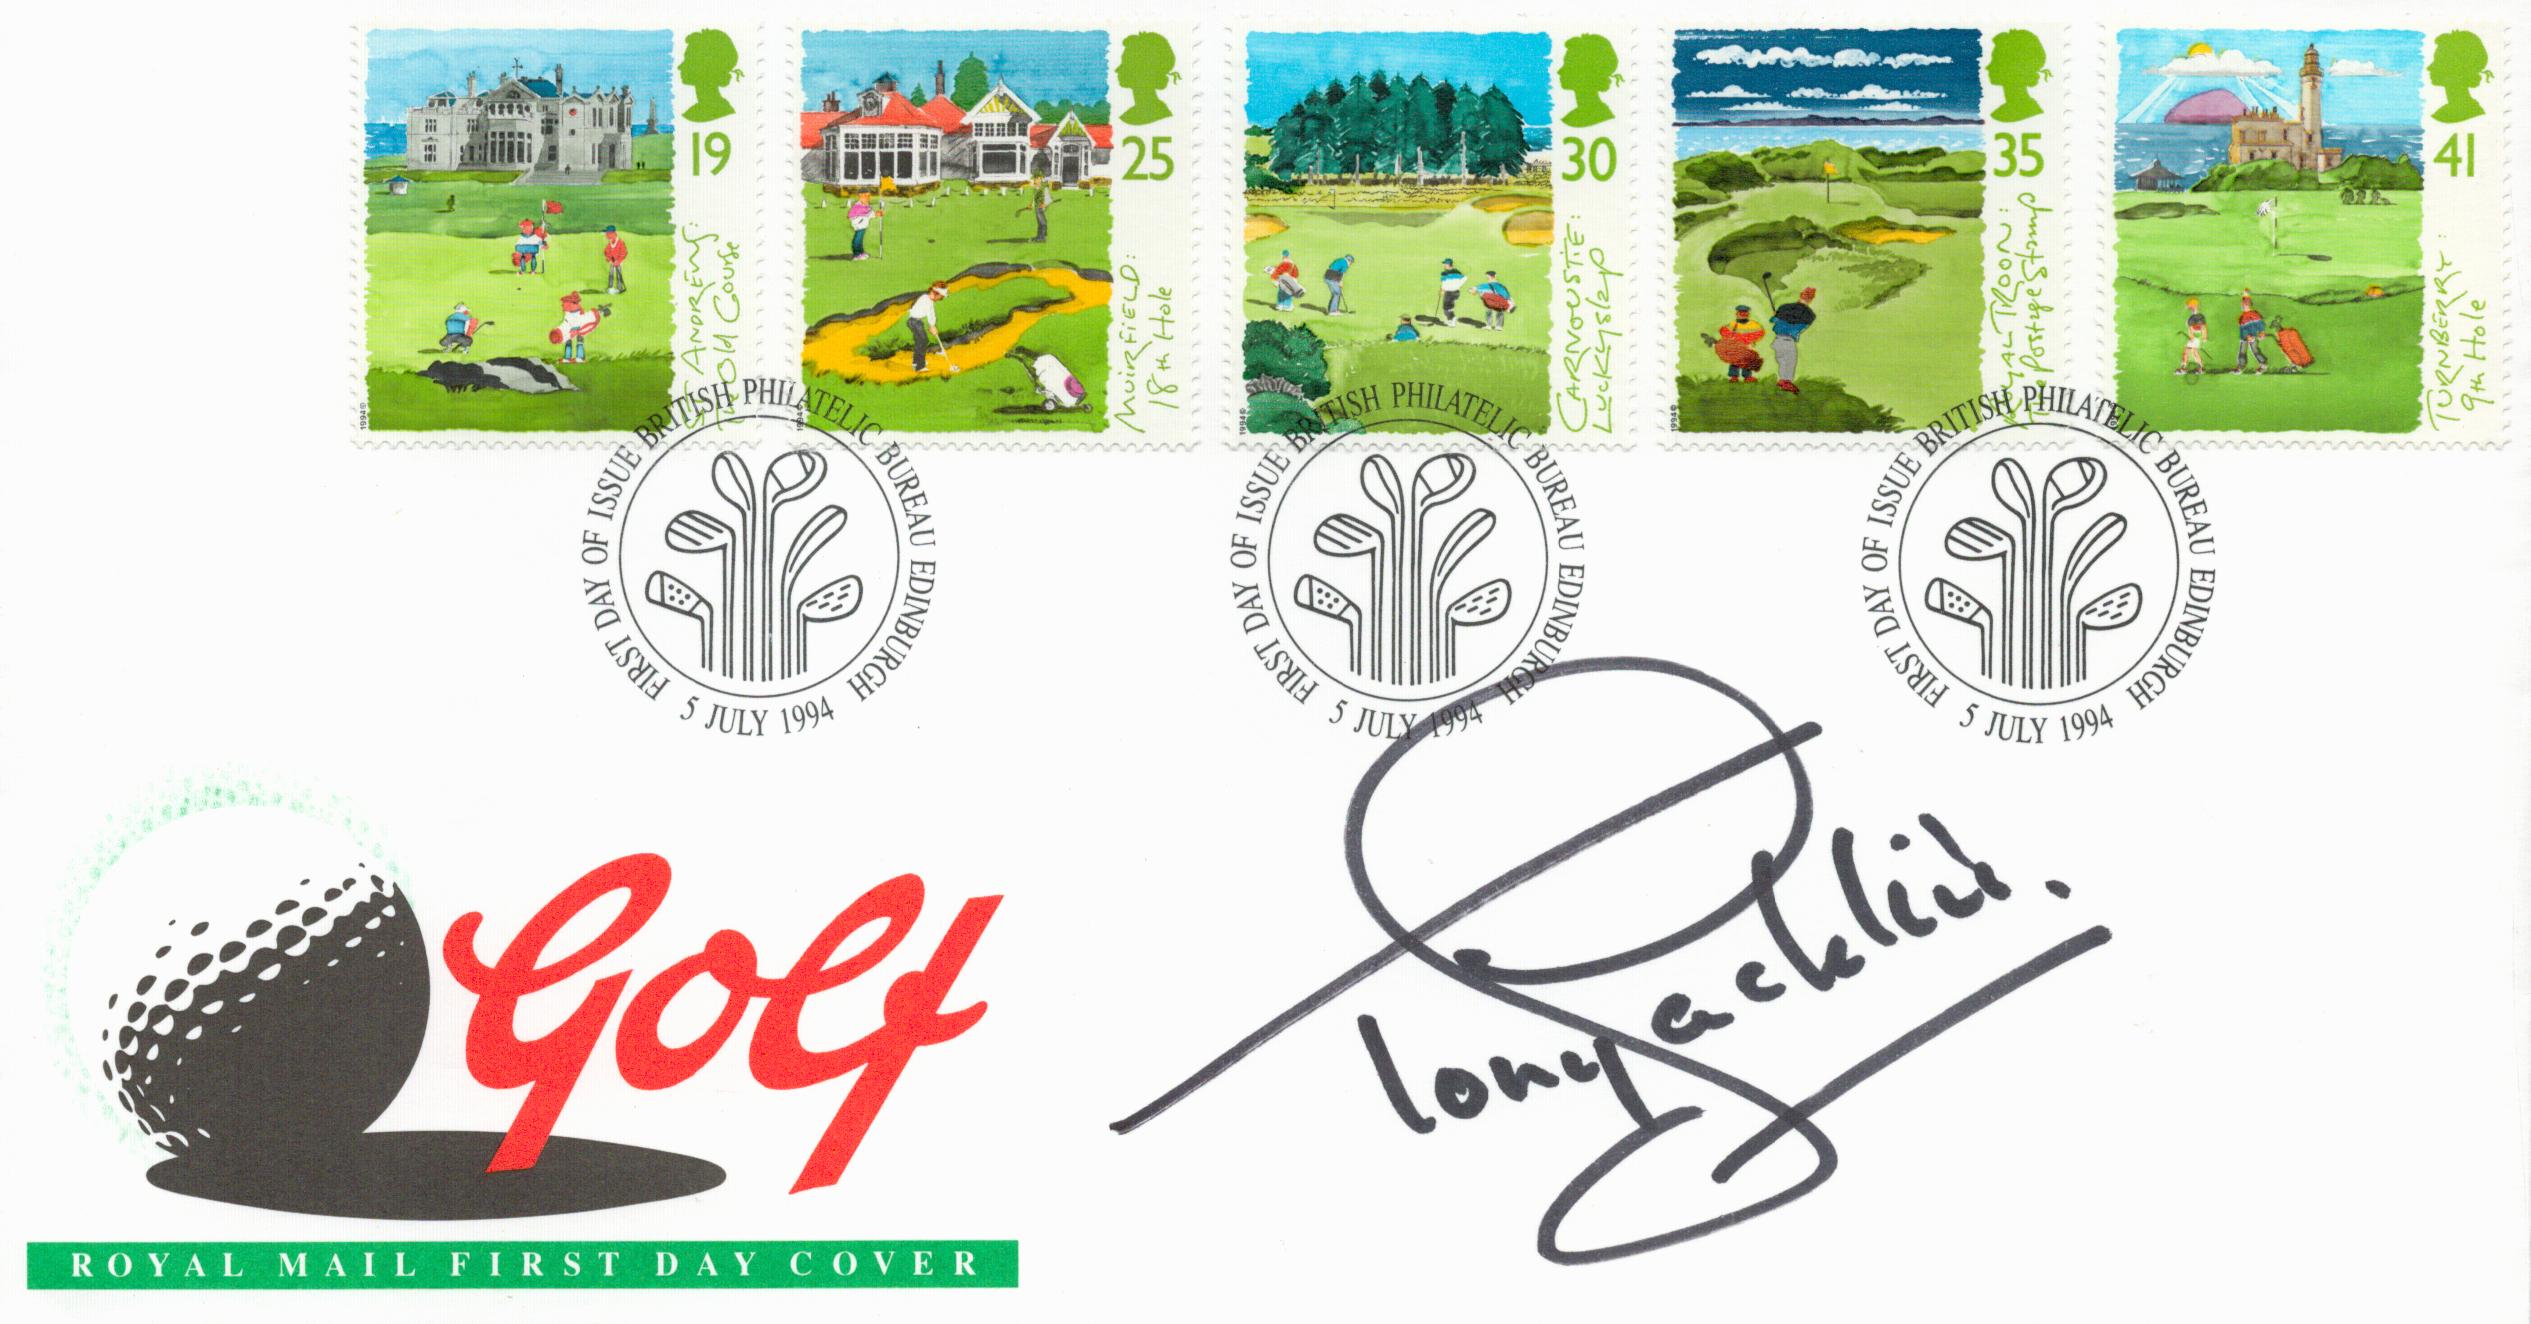 Golf Tony Jacklin signed Golf Royal Mail FDC Triple PM British Philatelic Bureau Edinburgh 5 July